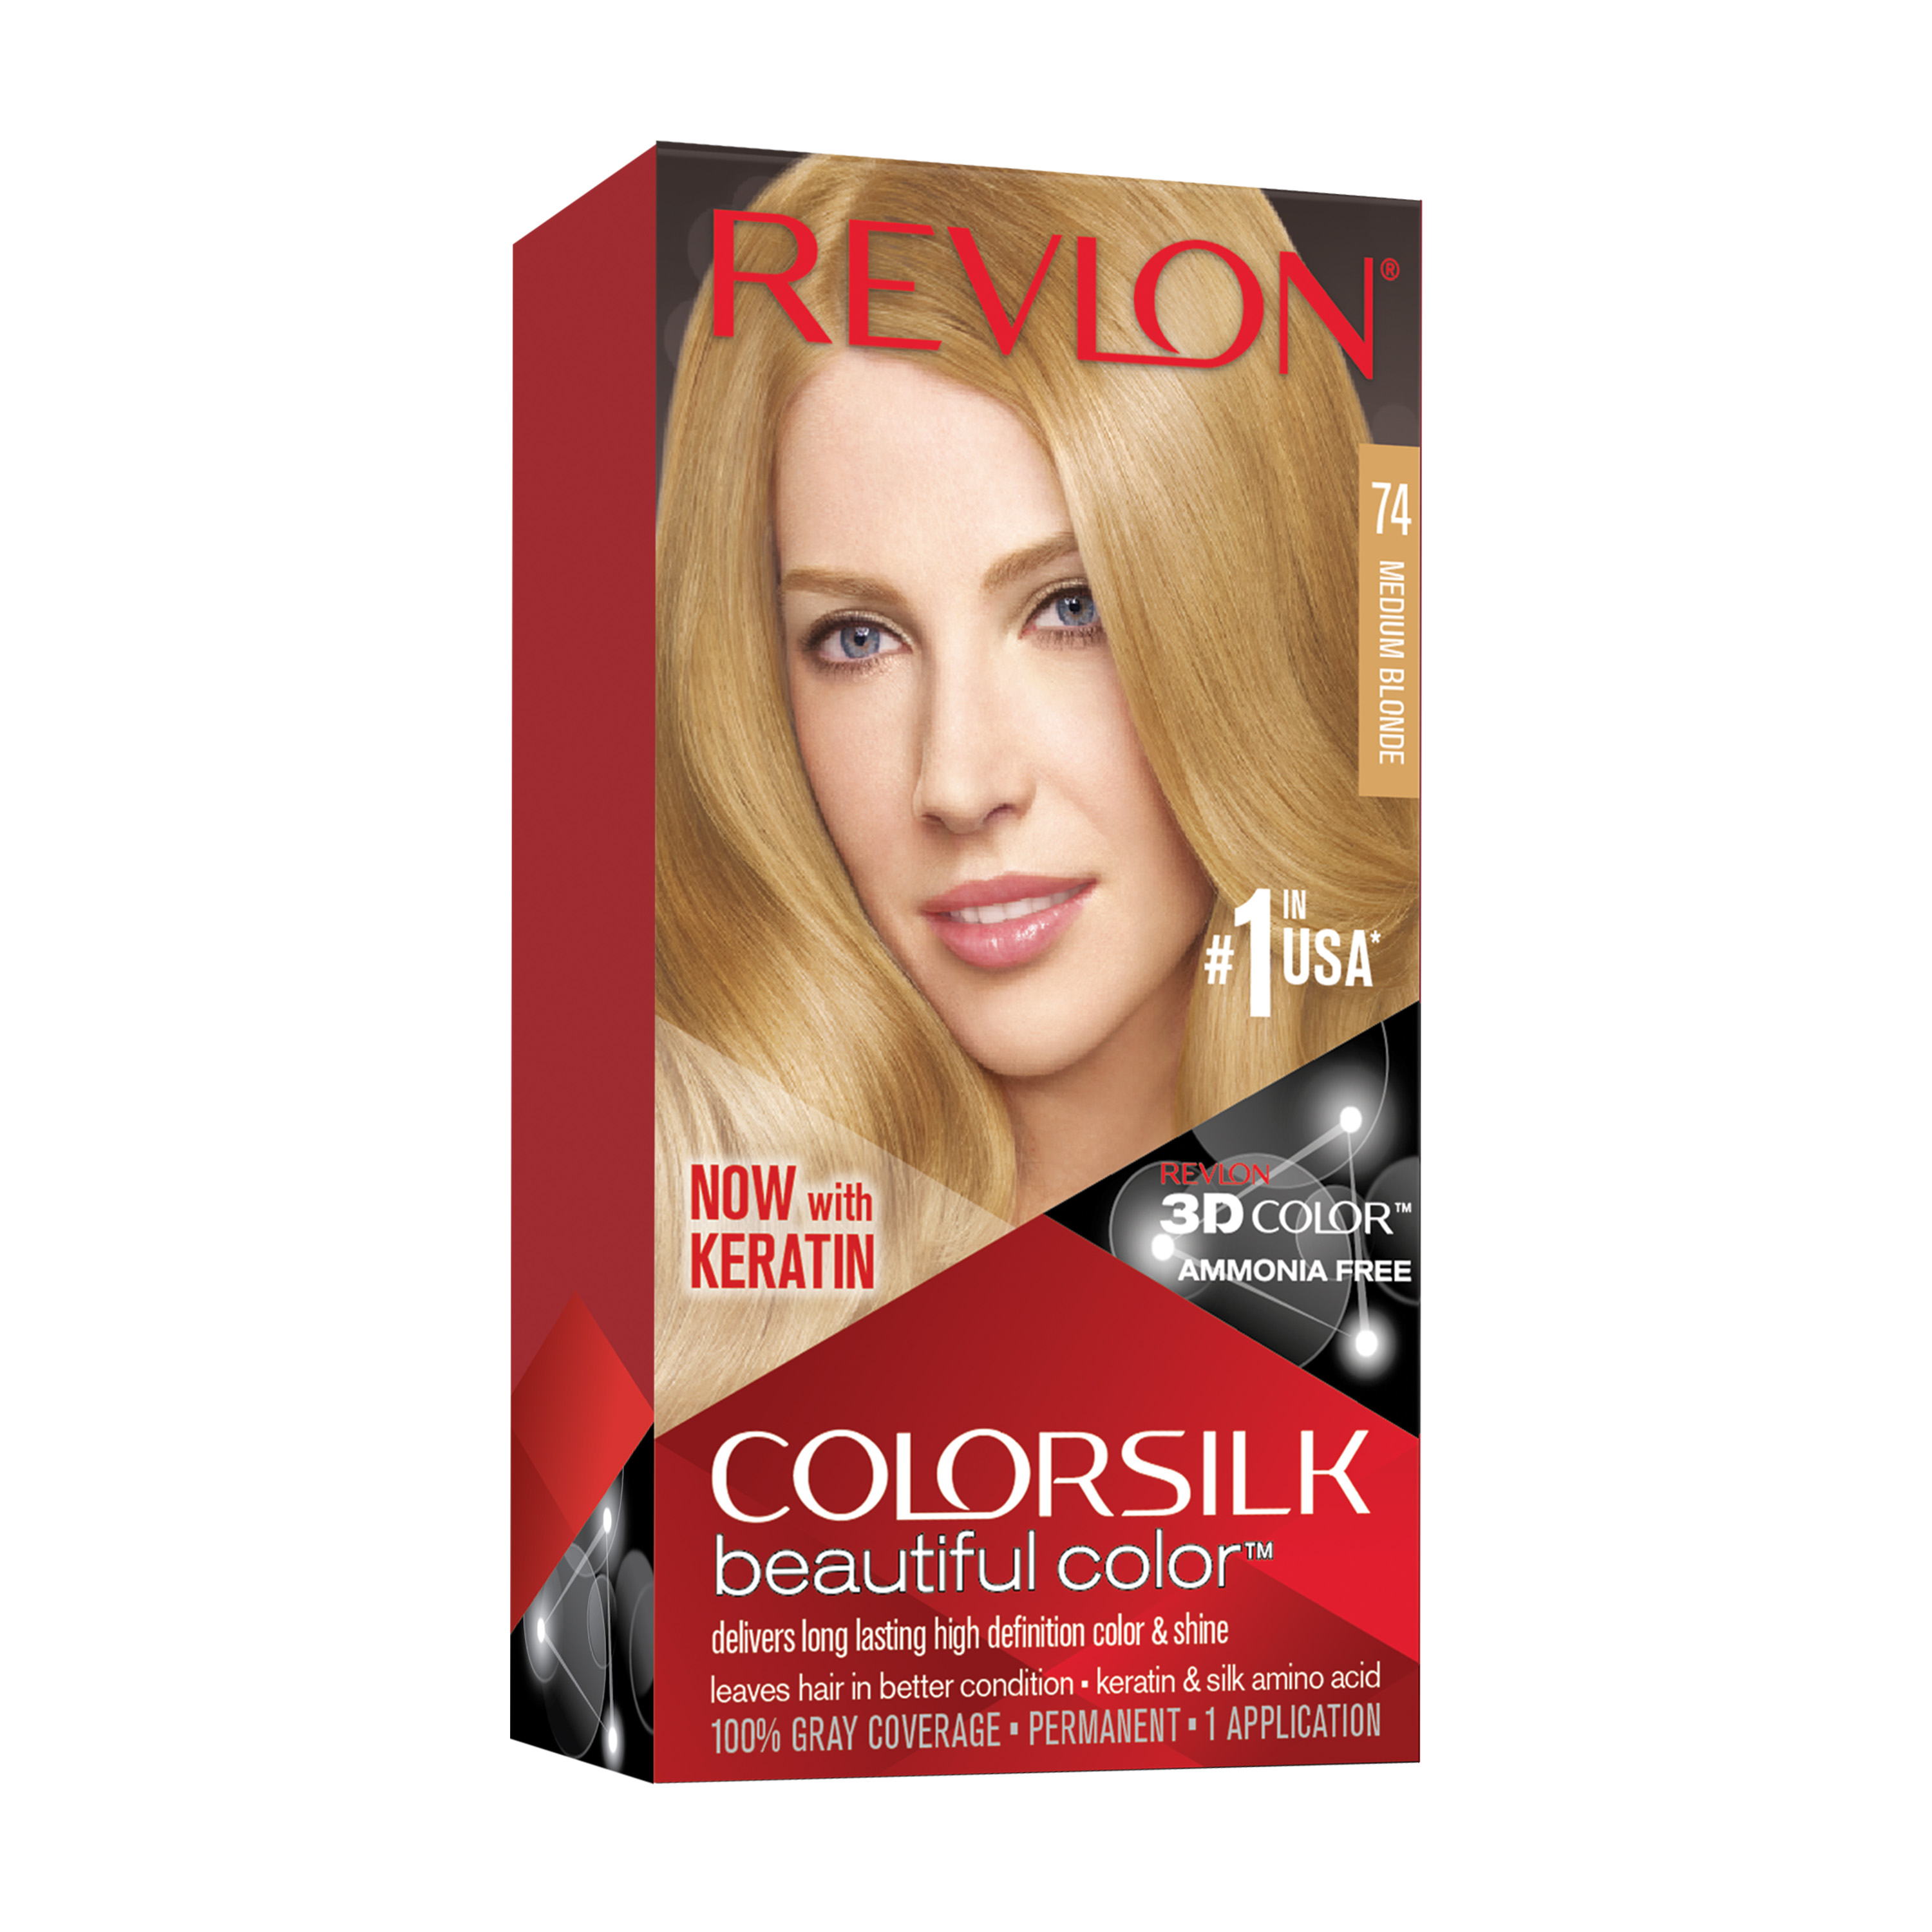 Revlon ColorSilk Beautiful Color Permanent Hair Color, 74 Medium Blonde, 1 Count - image 1 of 14